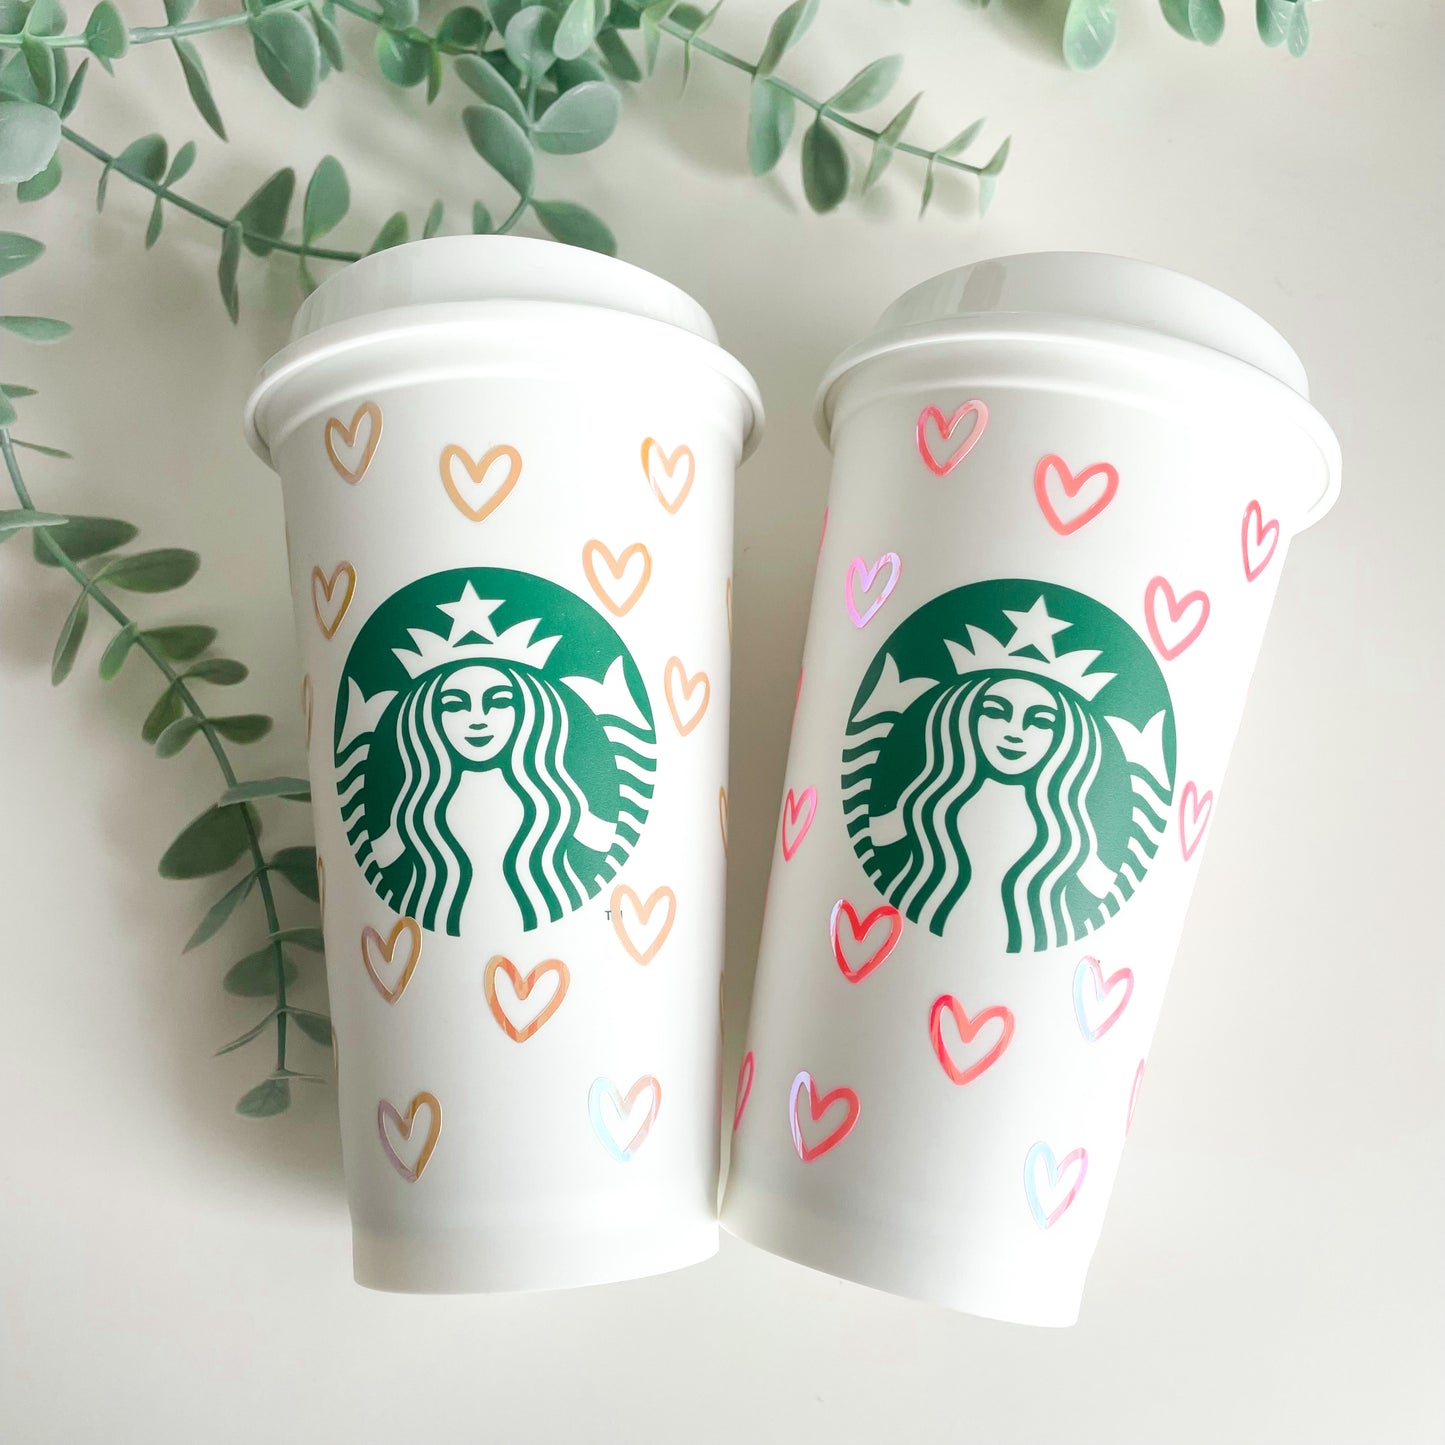 Reusable Heritage Logo Holiday Hot Cup Set (16oz./6 pcs.) – Starbucks  Thailand